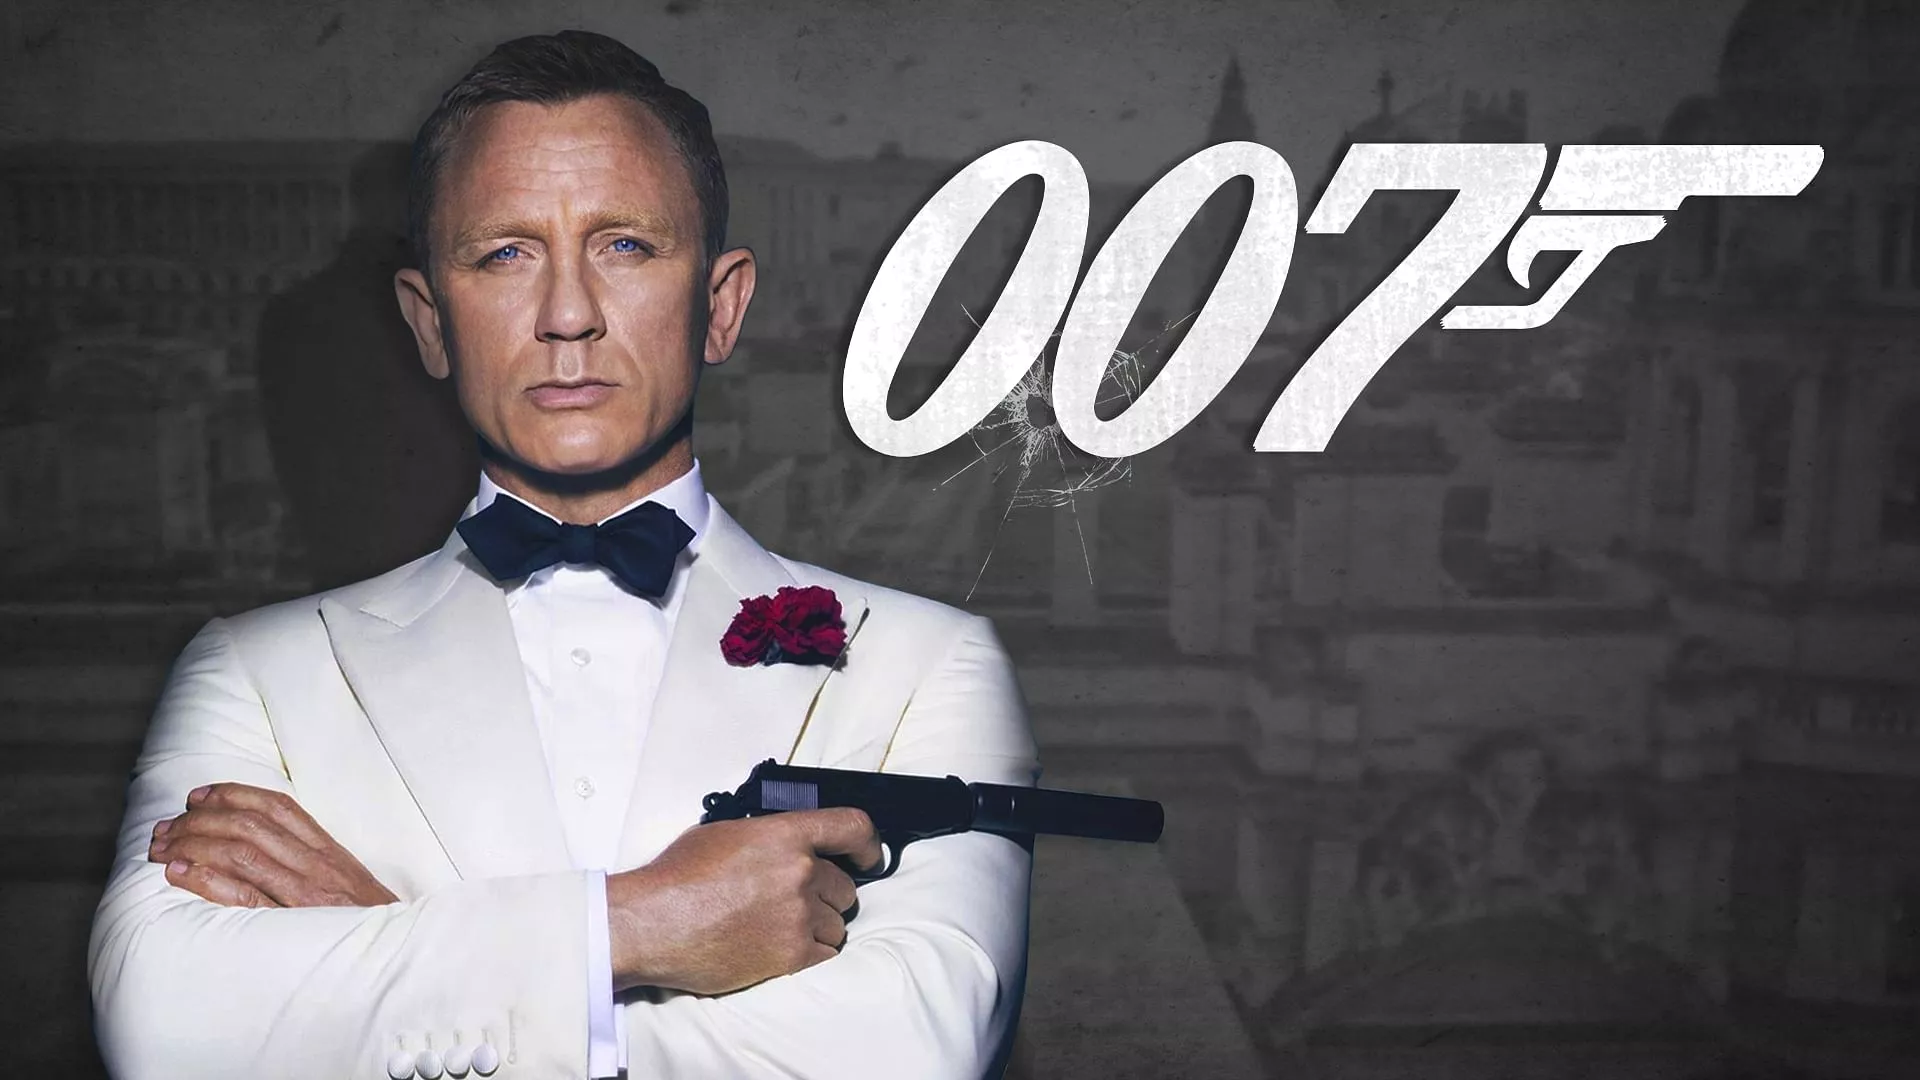 60 Years of Bond | Prime Video